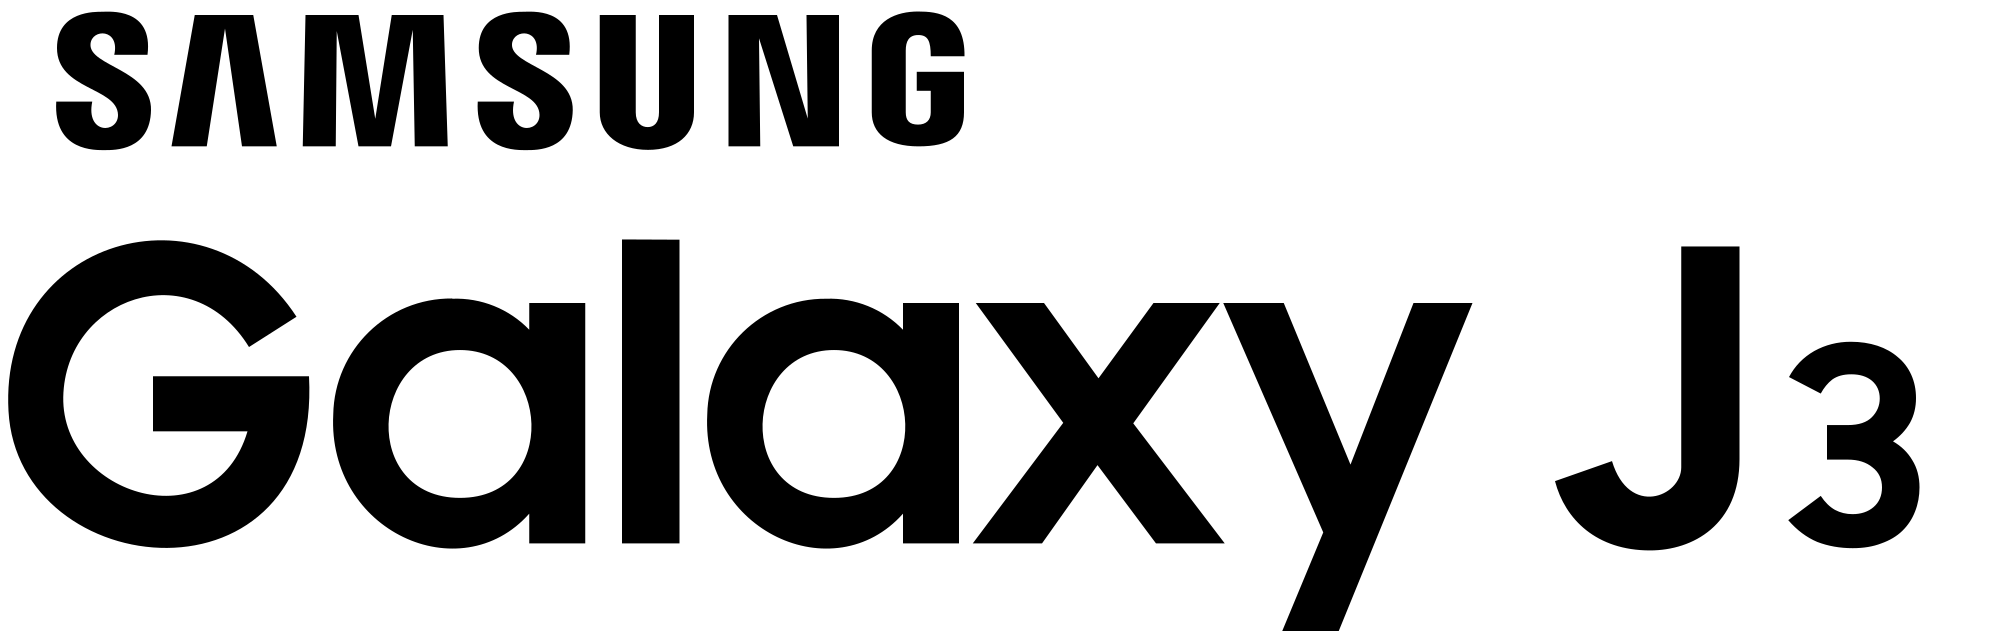 Samsung Galaxy J3 Logo - File:Samsung Galaxy J3 logo.svg - Wikimedia Commons